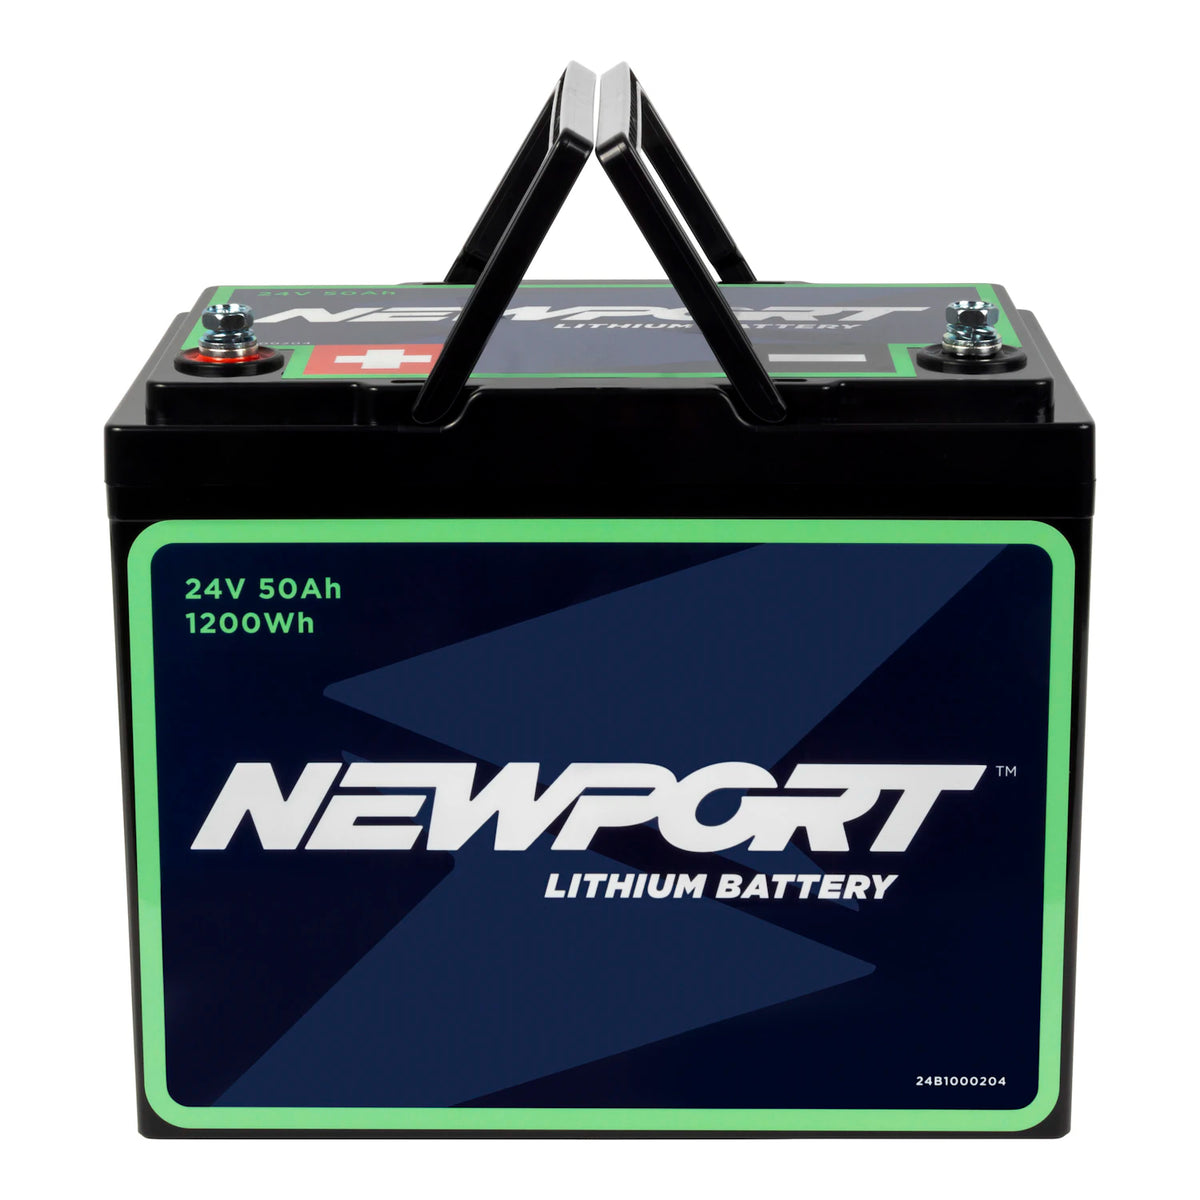 Newport 24V 50Ah Lithium Battery